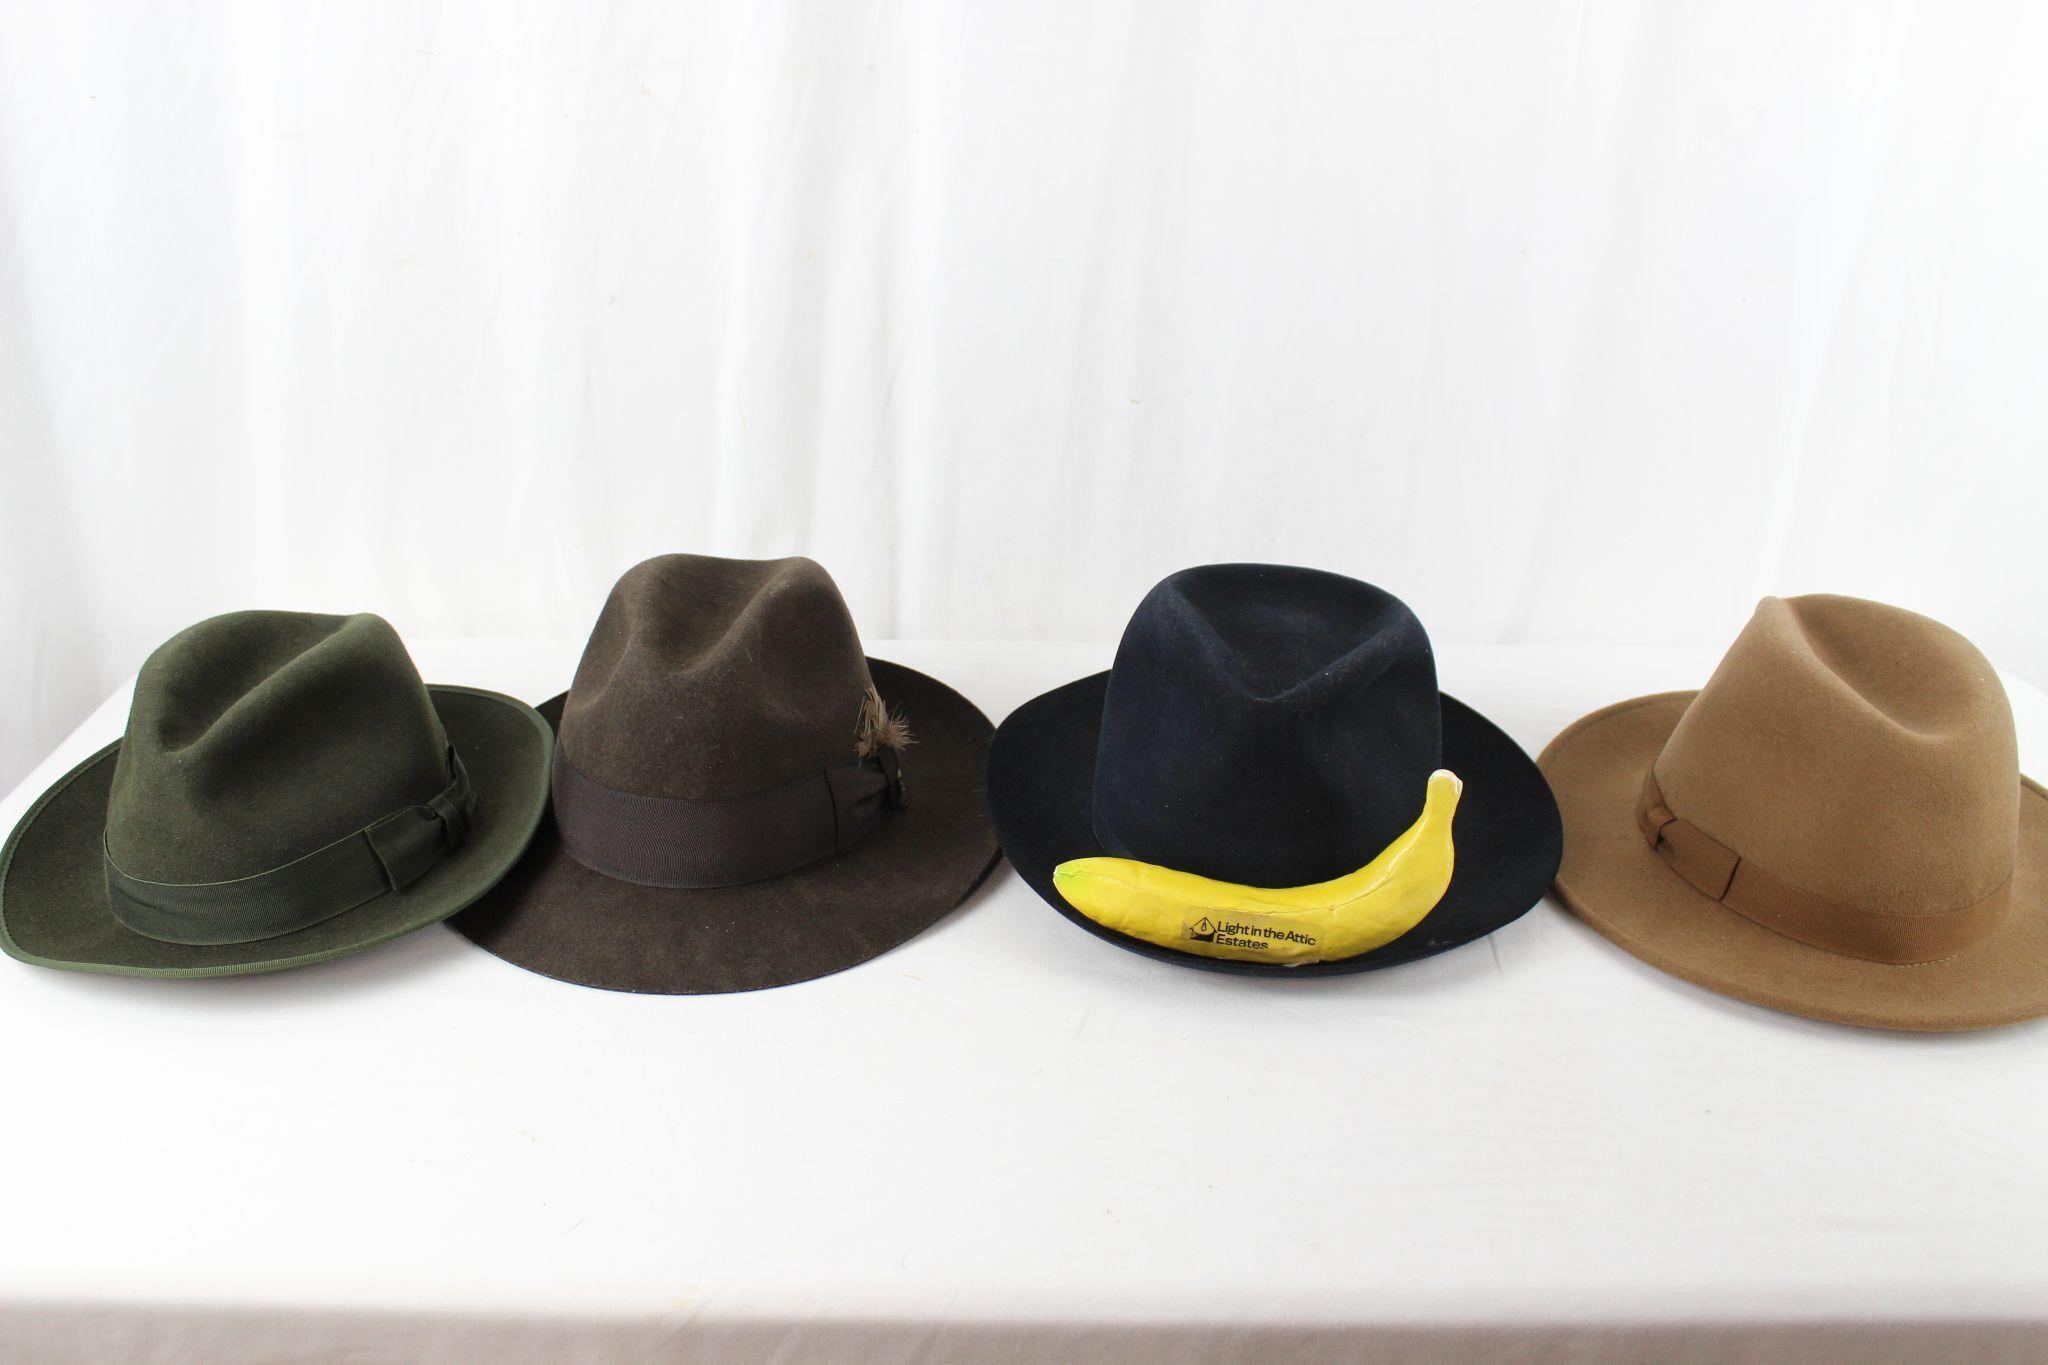 Scala & Christy's Men's Fedora Hats